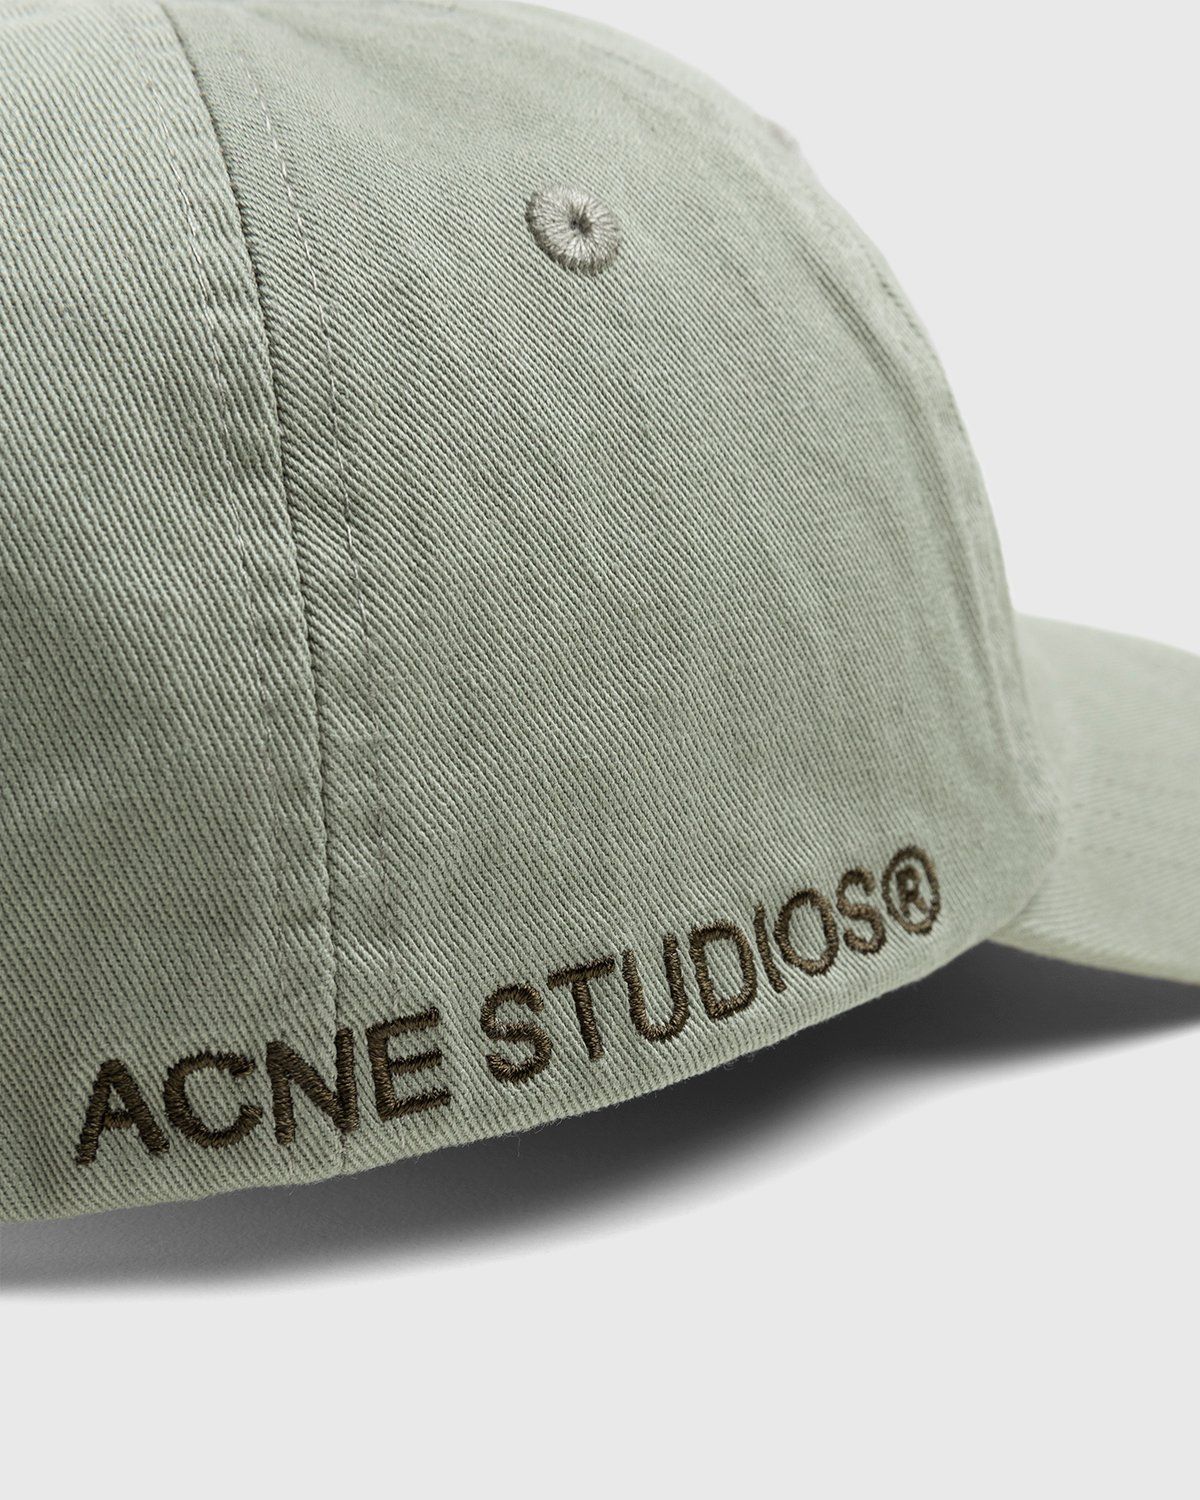 Acne Studios – Cotton Baseball Cap Sage Green - Caps - Green - Image 5